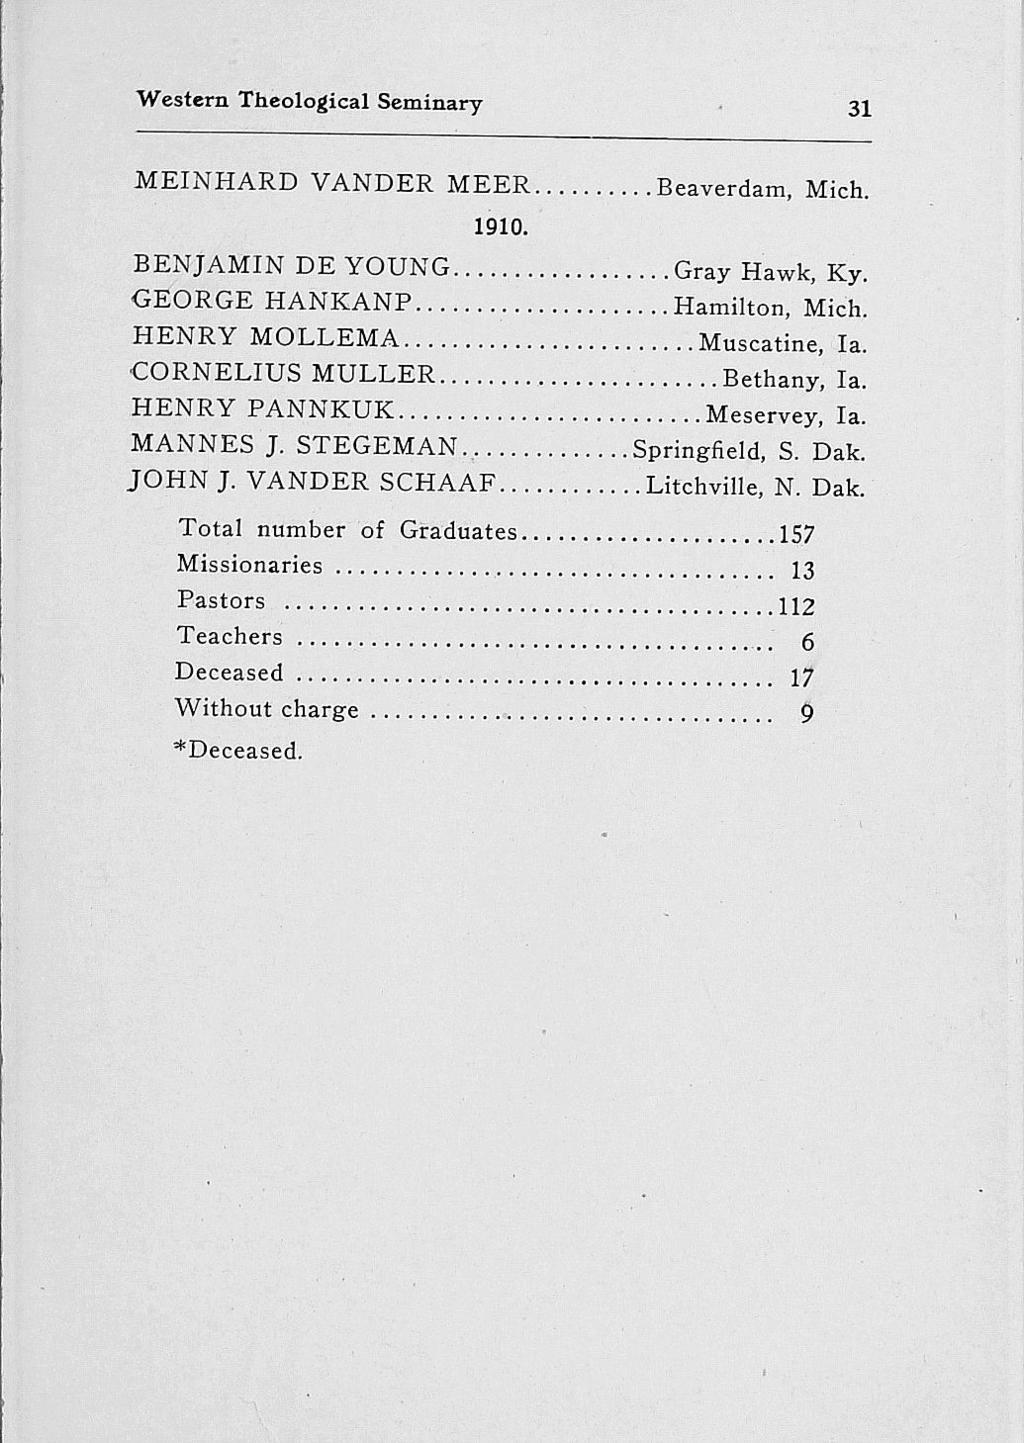 Western Theological Seminary 31 MEINHARD VANDER MEER... Beaverdam, Mich. 1910. BENJAMIN DE YOUNG... Gray Hawk, Ky. GEORGE HANKANP... Hamilton, Mich. HENRY MOLLEMA... Muscatine, la. CORNELIUS MULLER.